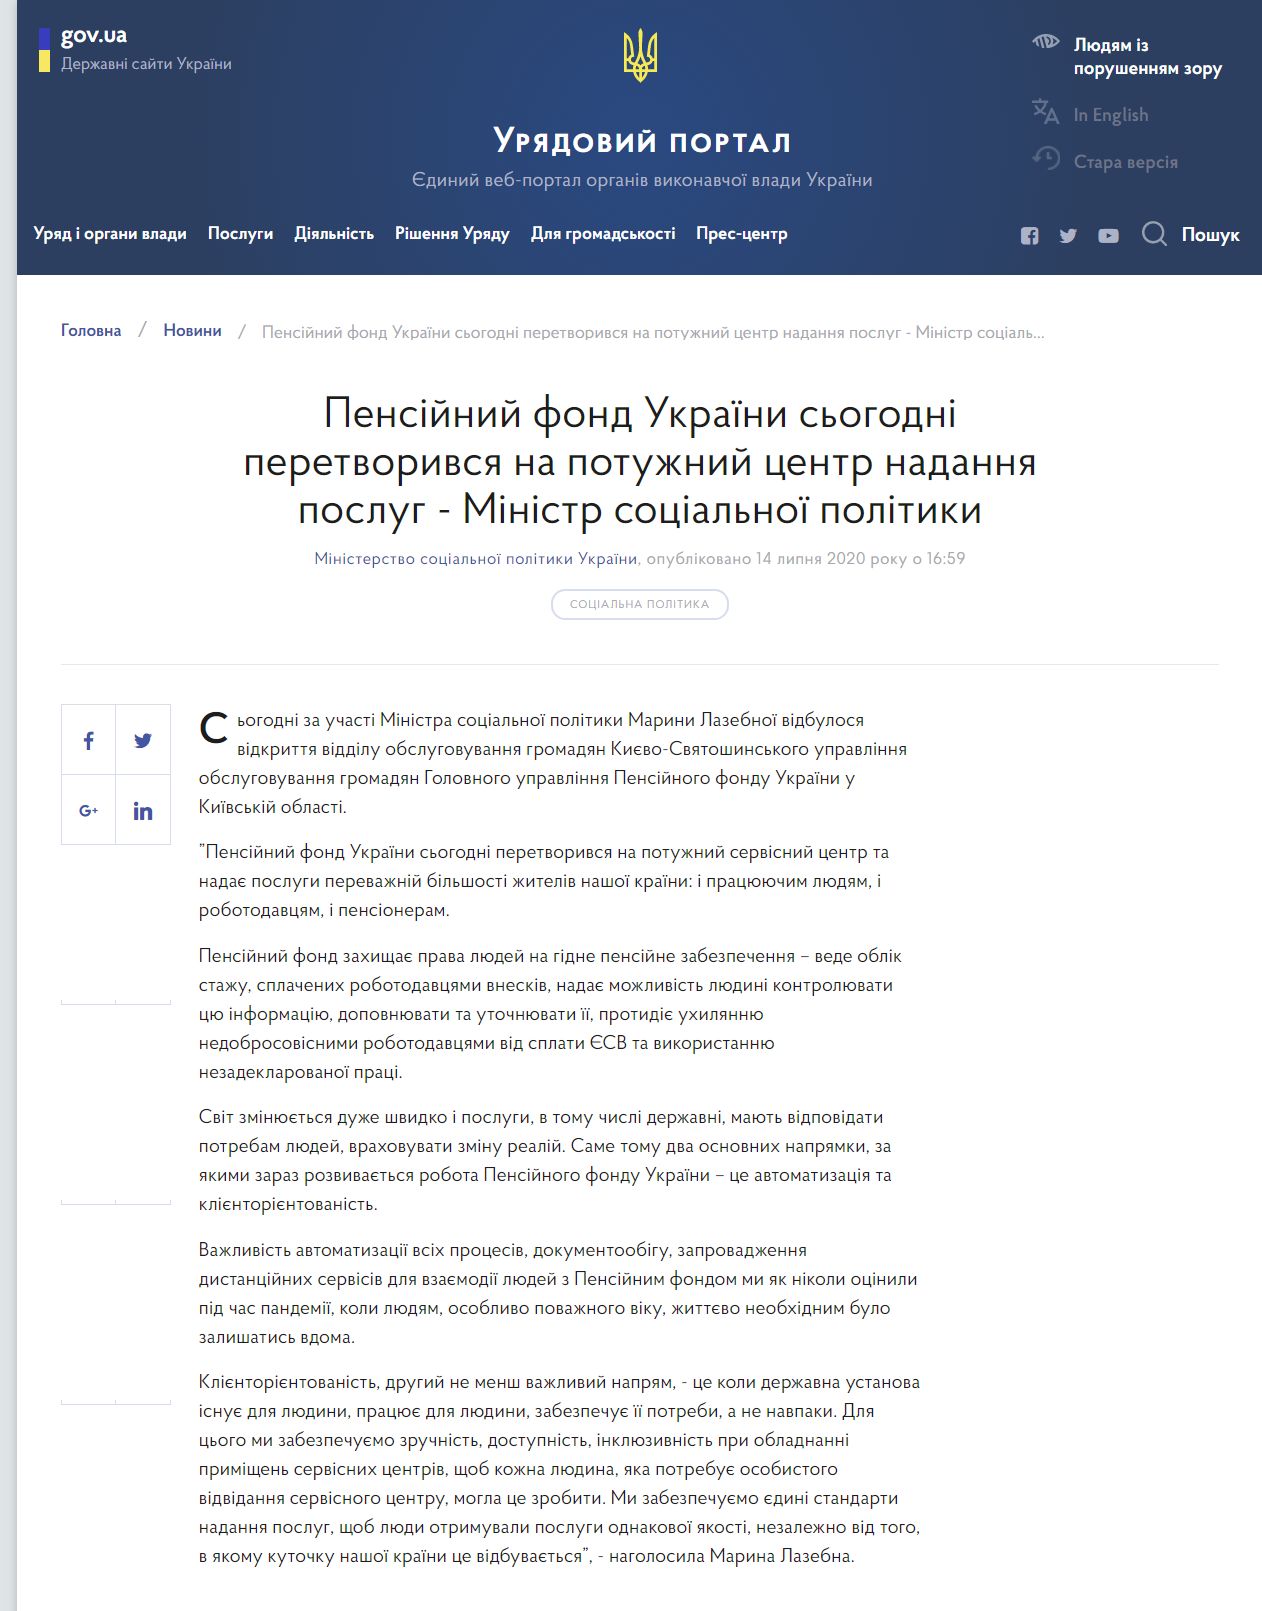 https://www.kmu.gov.ua/news/pensijnij-fond-ukrayini-sogodni-peretvorivsya-na-potuzhnij-centr-nadannya-poslug-ministr-socialnoyi-politiki